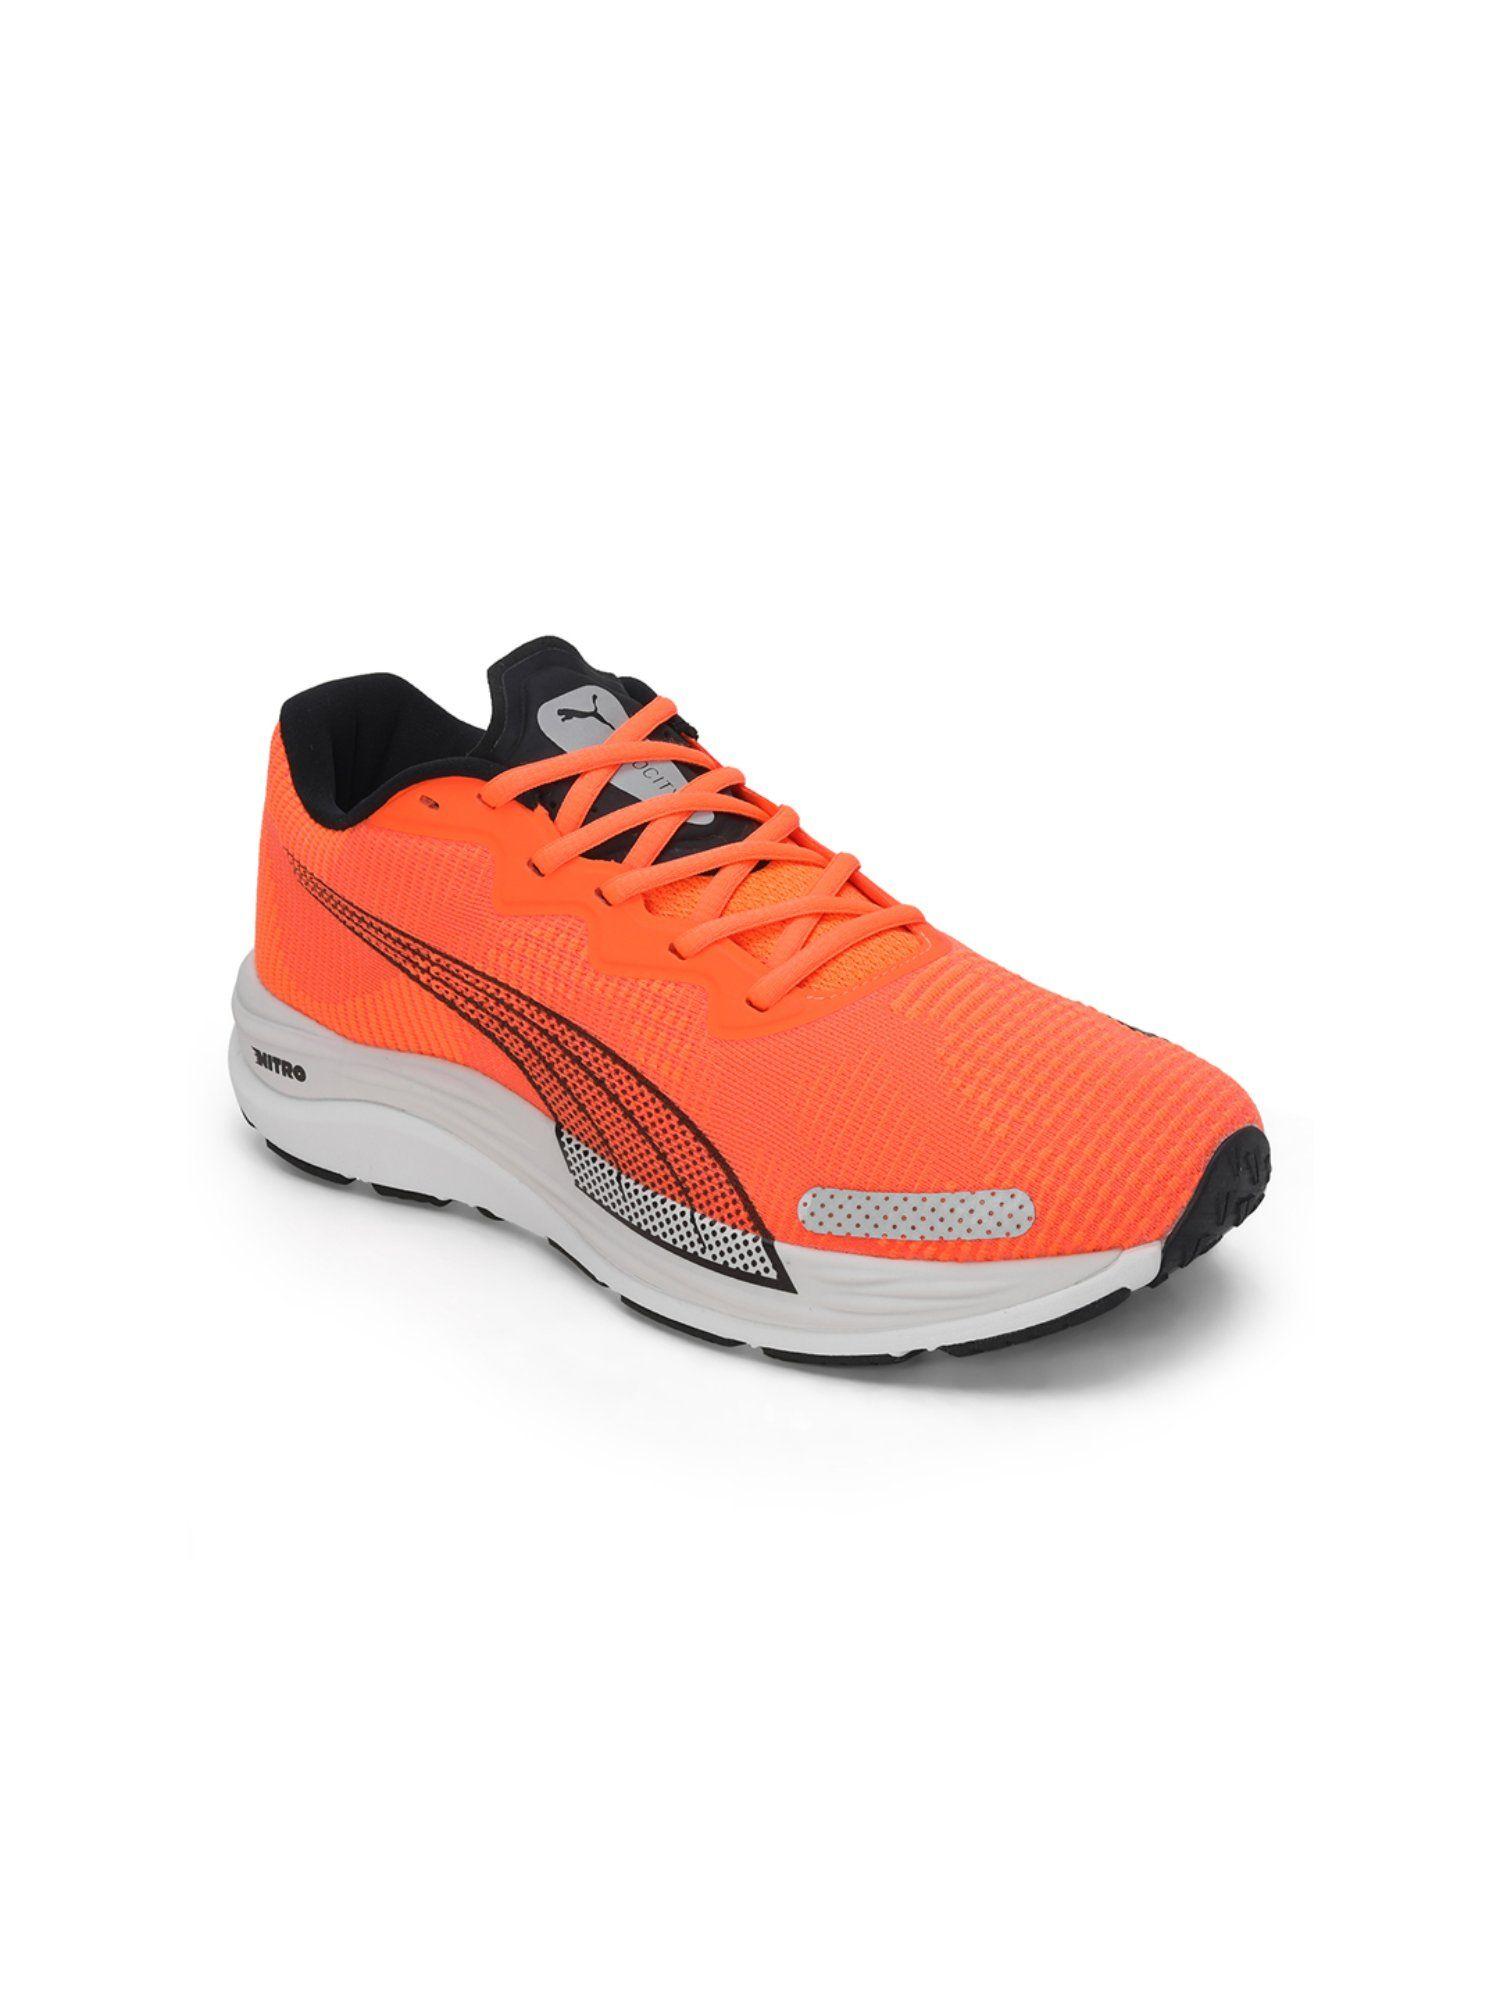 velocity-nitro-2-fade-men's-orange-running-shoes